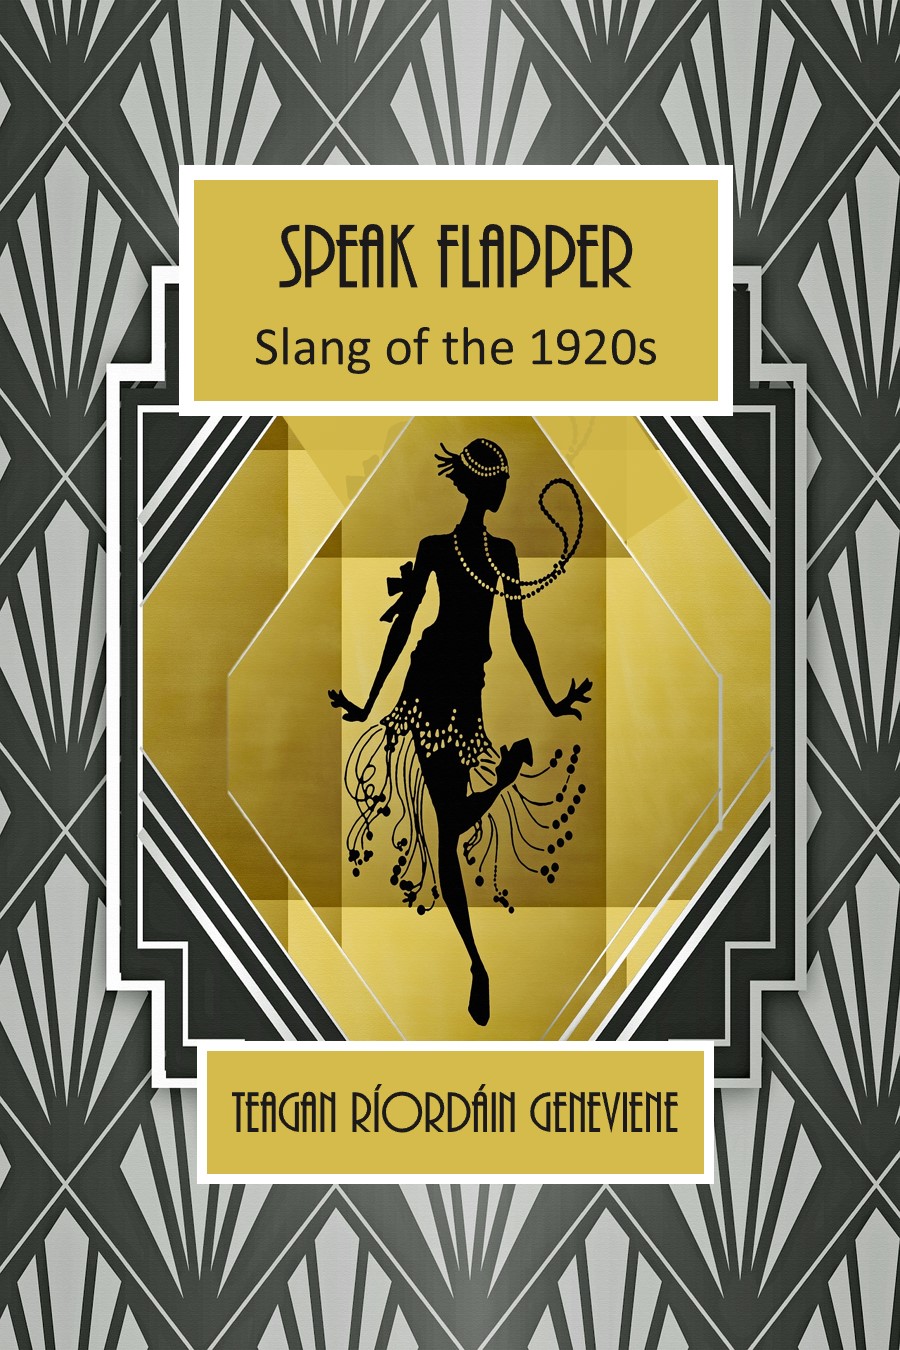 Speak Flapper, Slang of the 1920s by Teagan Ríordáin Geneviene